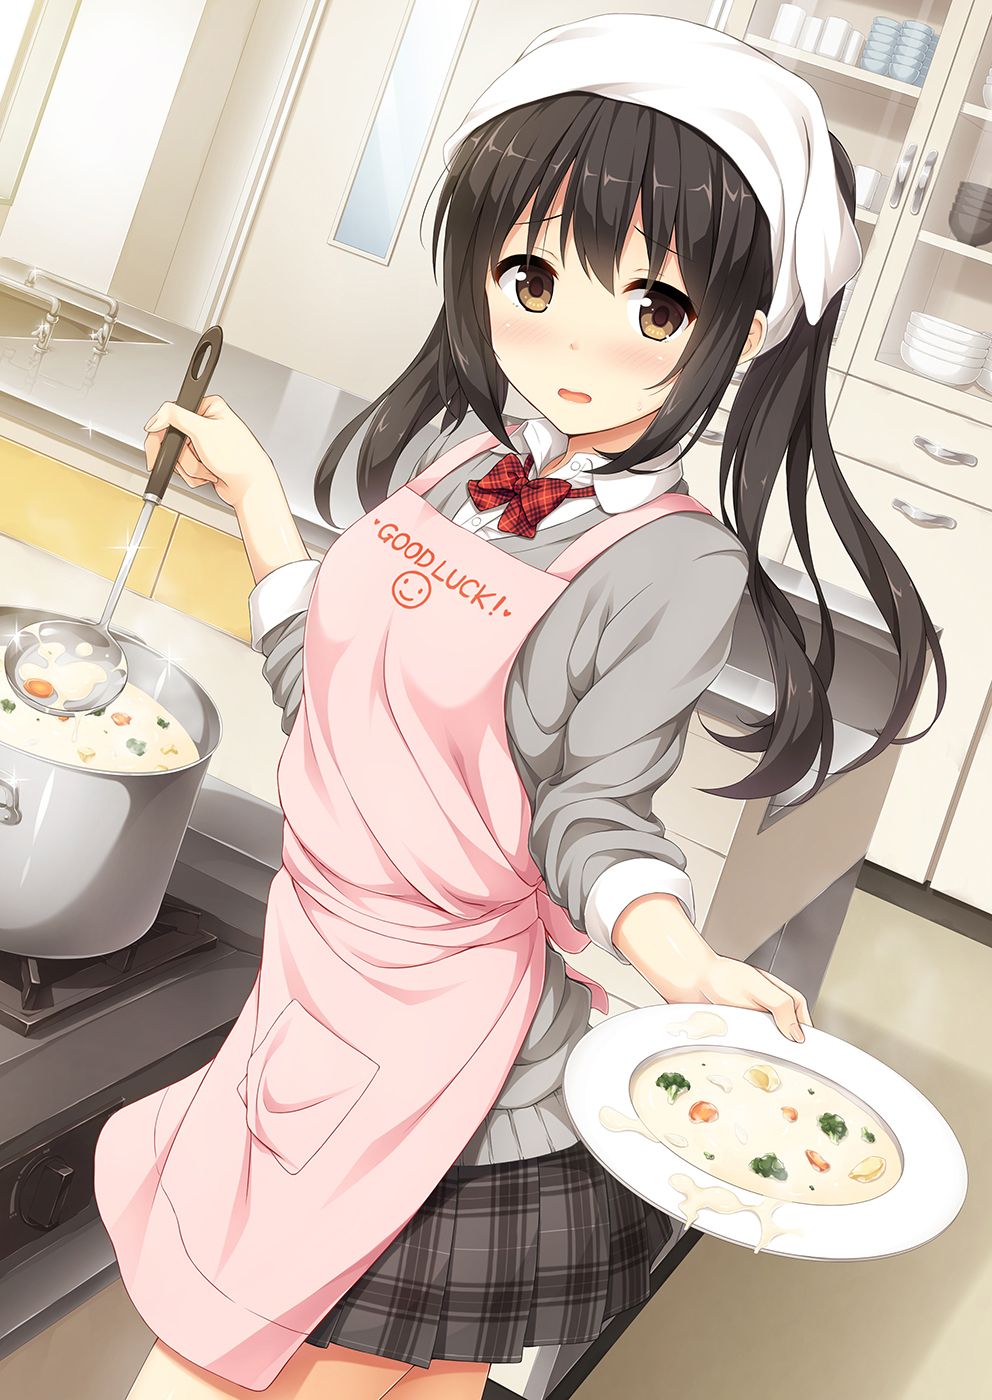 Image Of Chef Anime Girl Cooking.